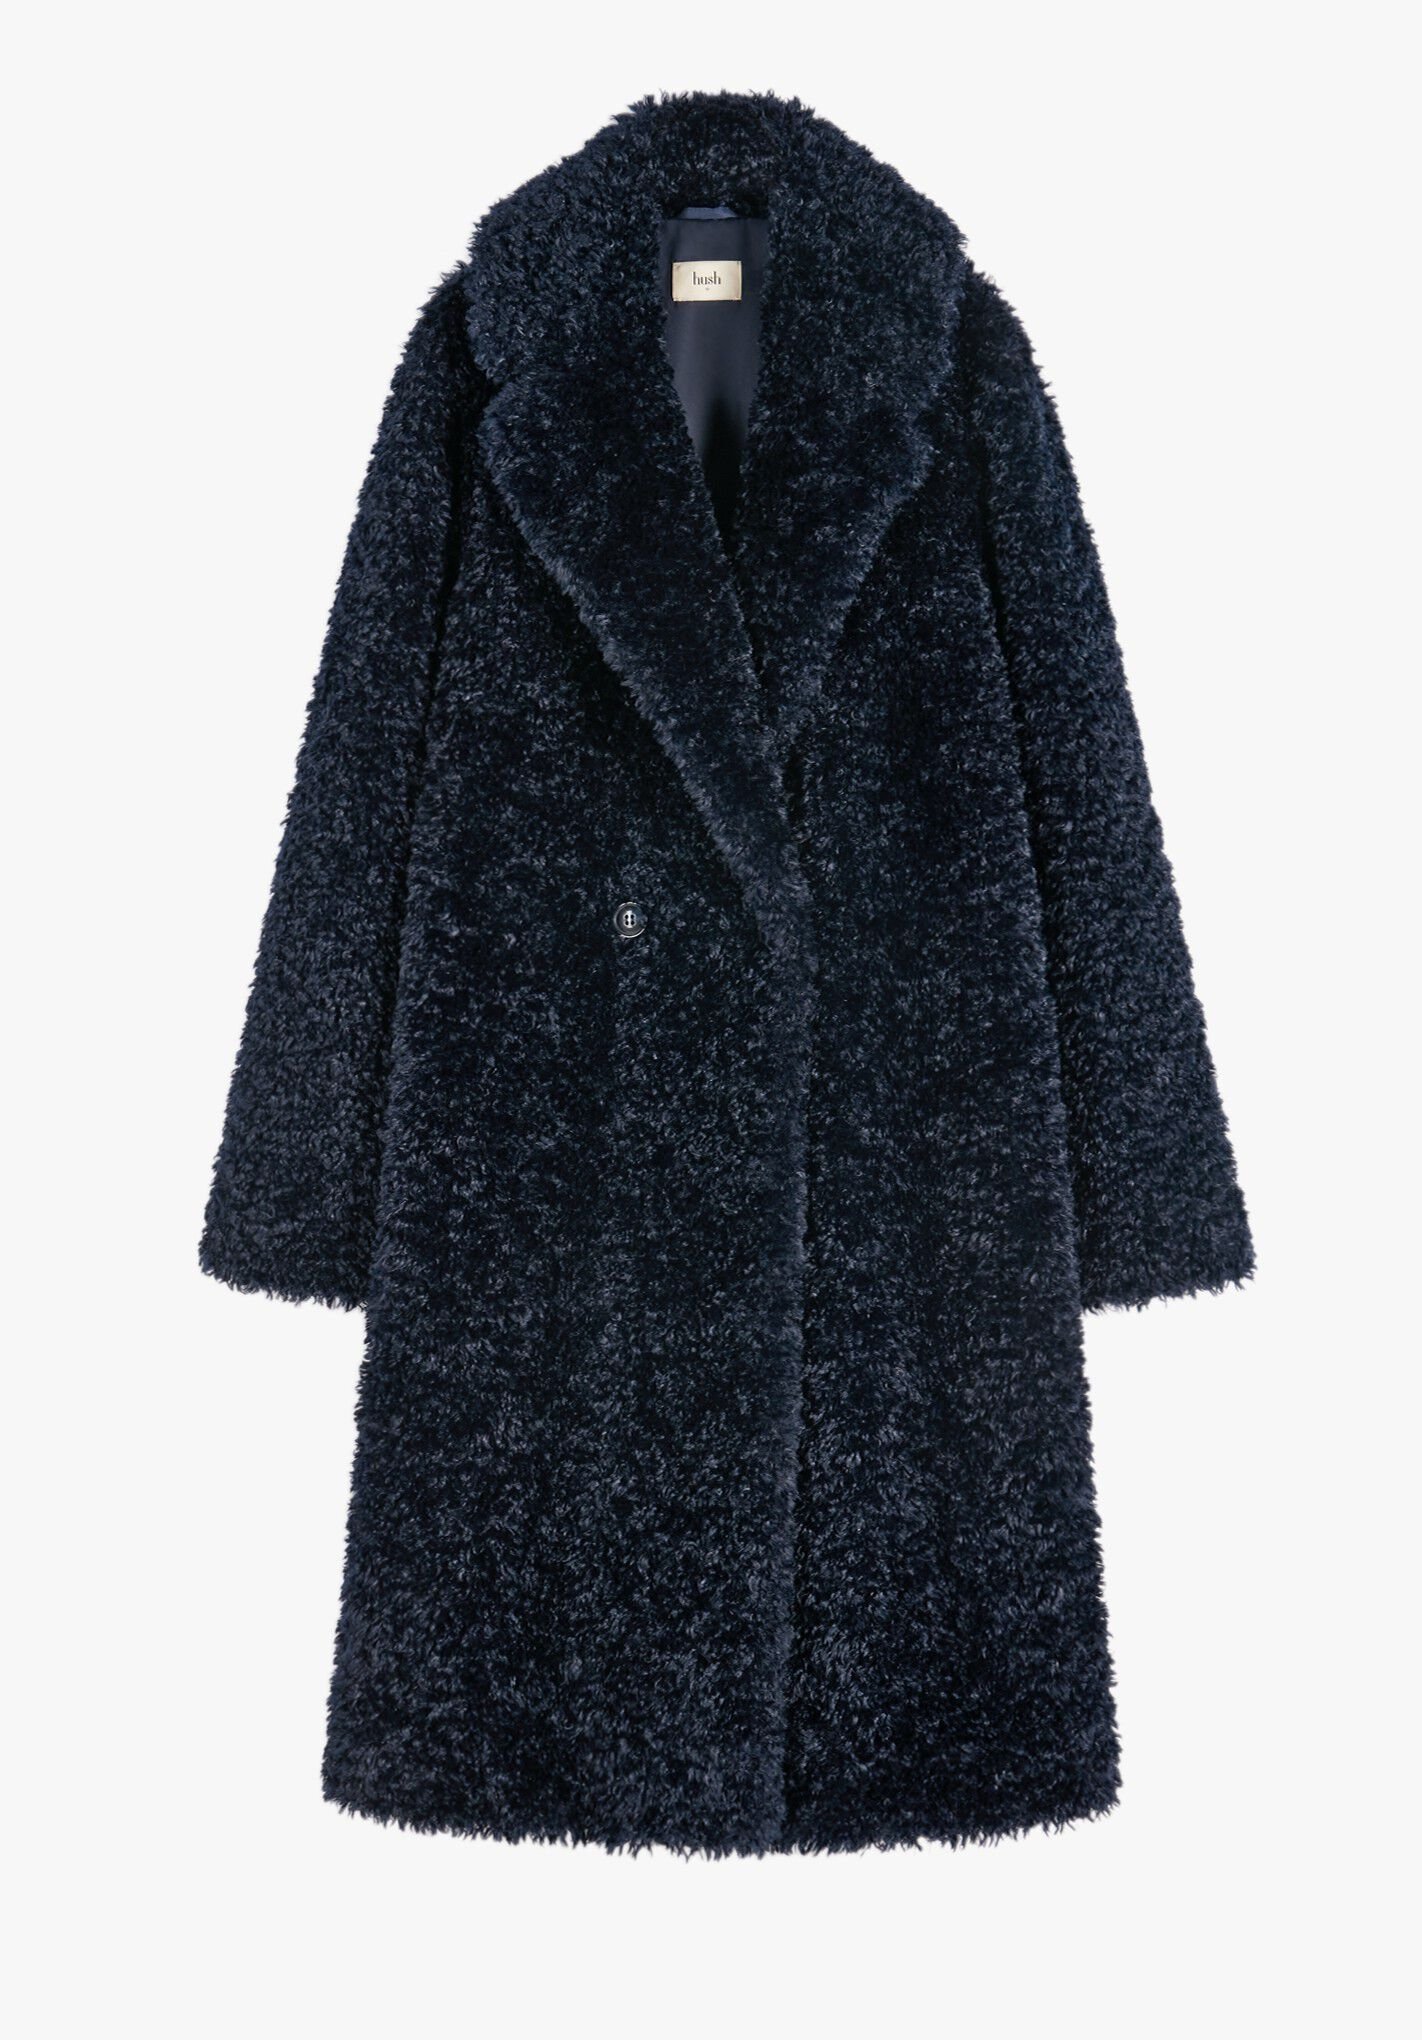 HUSH Leighton Textured Faux Fur Coat in Midnight Navy | Endource